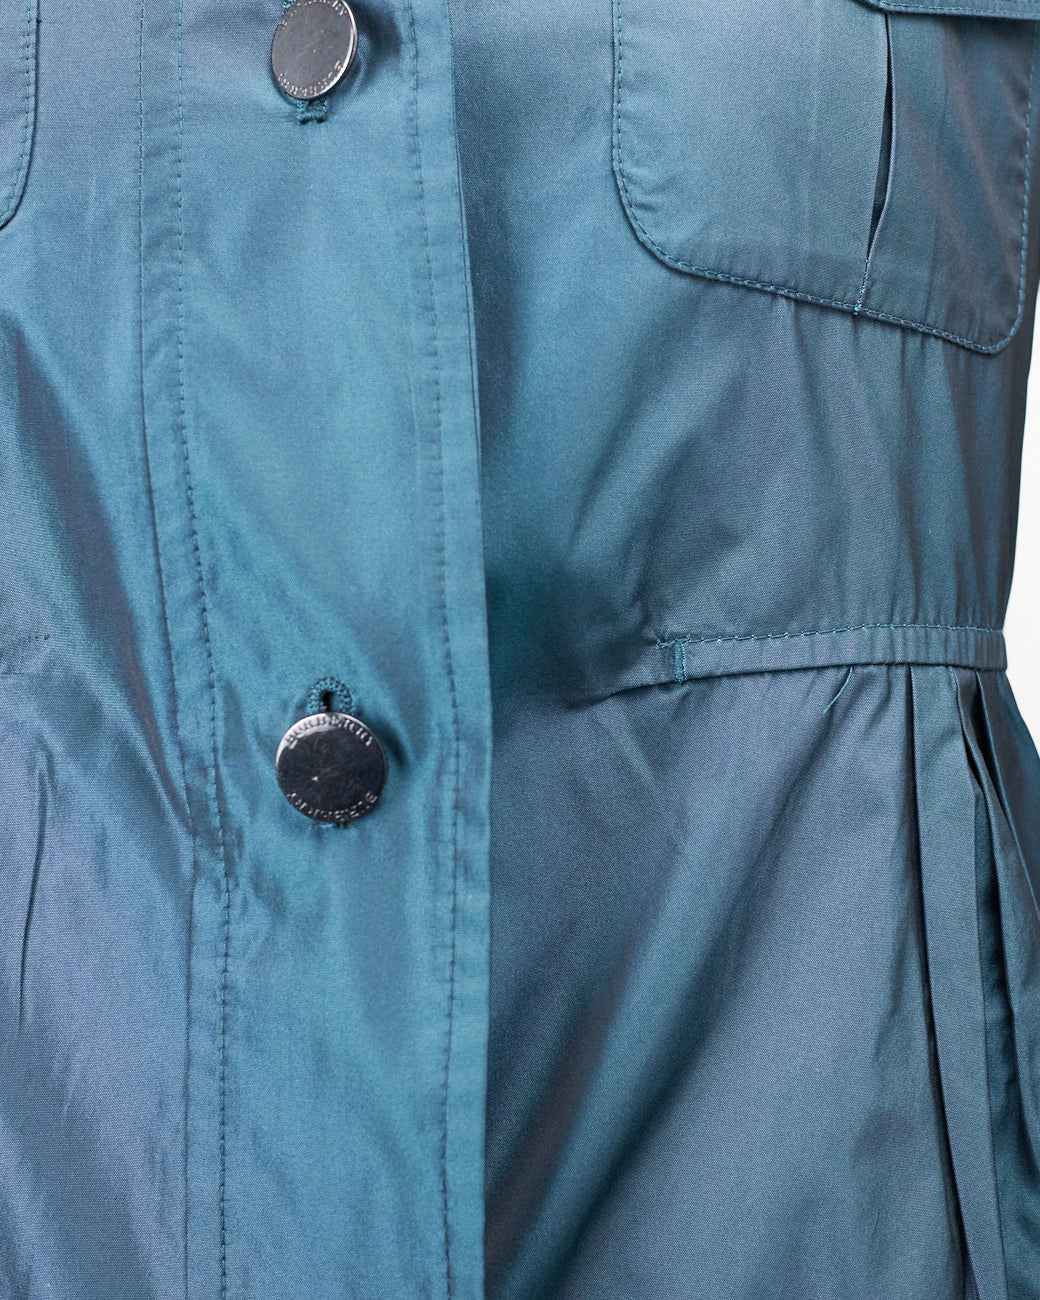 Burberry Blue Shiny Jacket